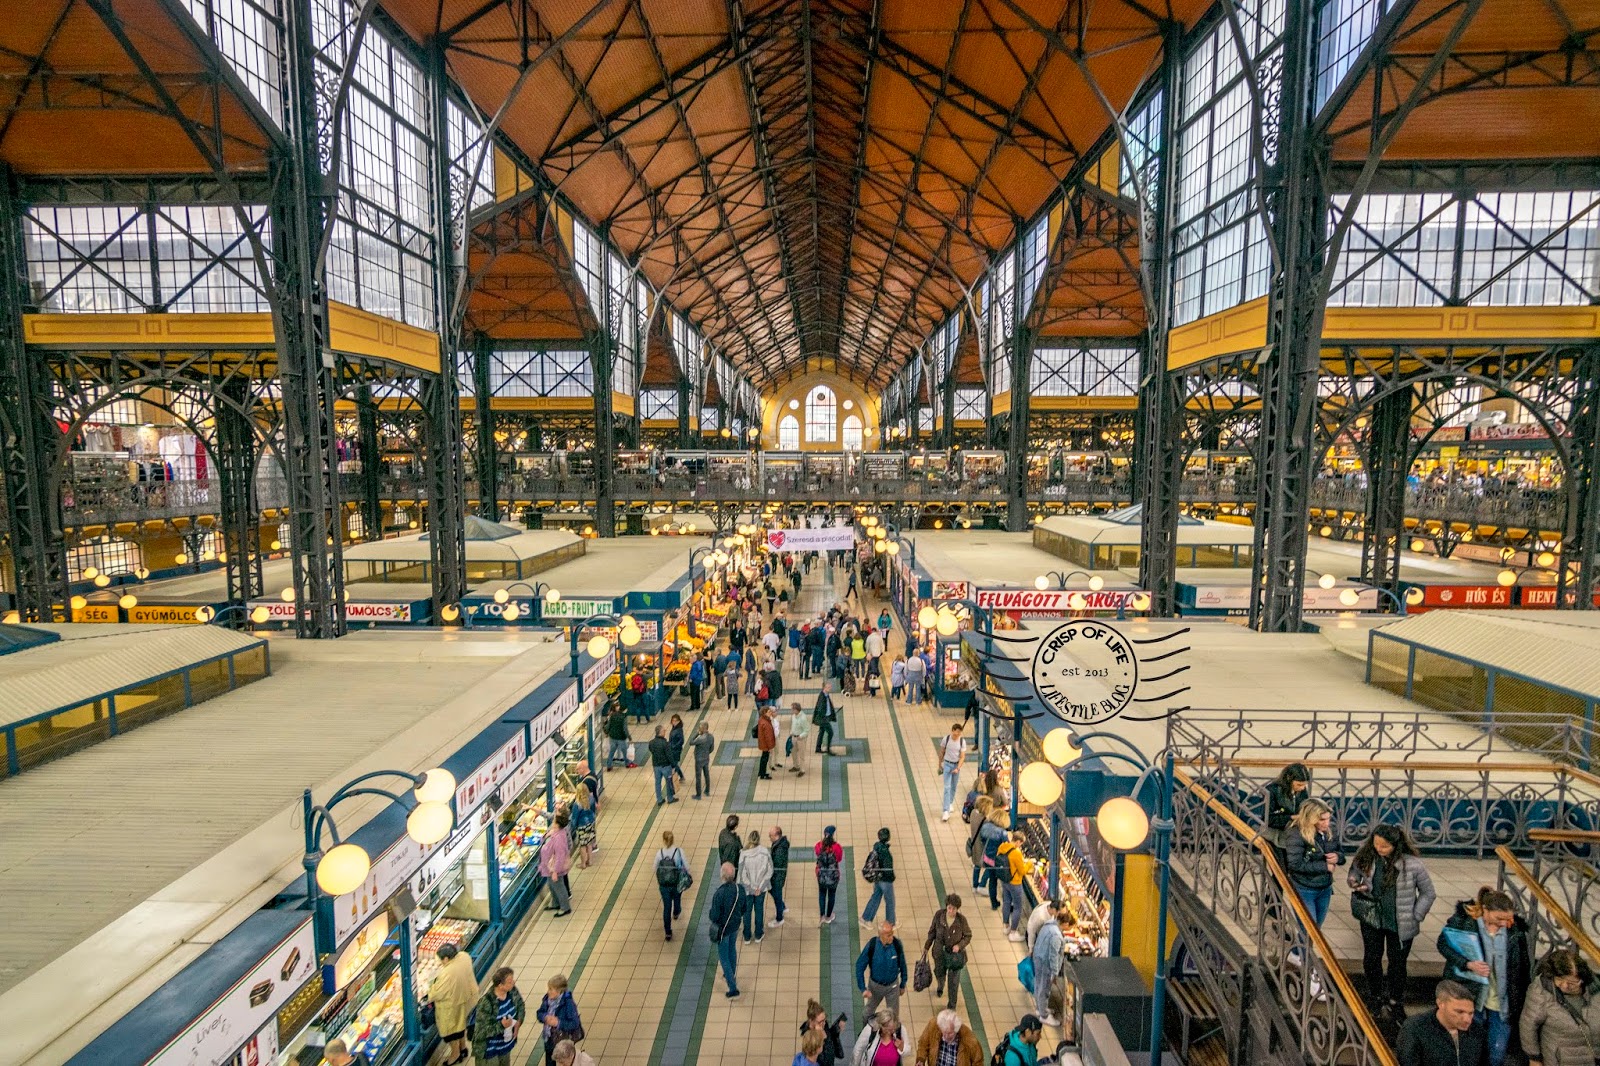 Budapest Central Market Hall (Nagyvásárcsarnok) @ Hungary 